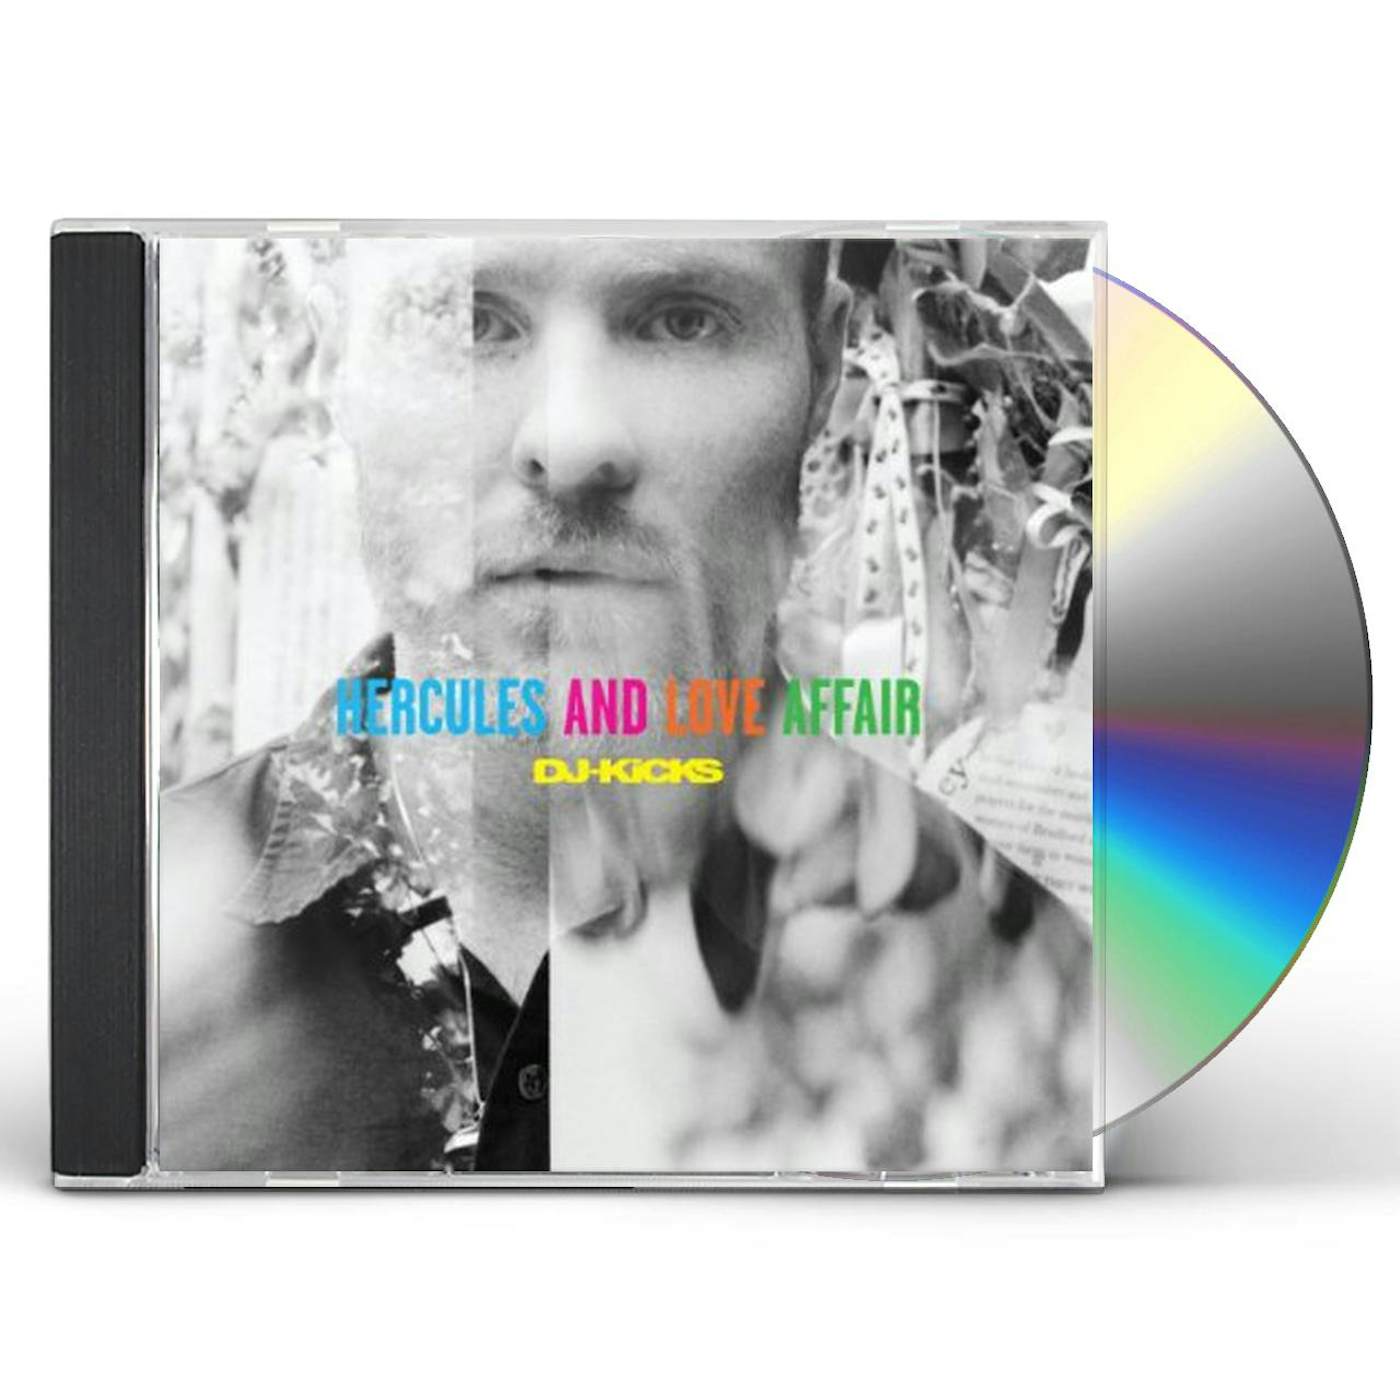 HERCULES & LOVE AFFAIR (DJ-KICKS) CD